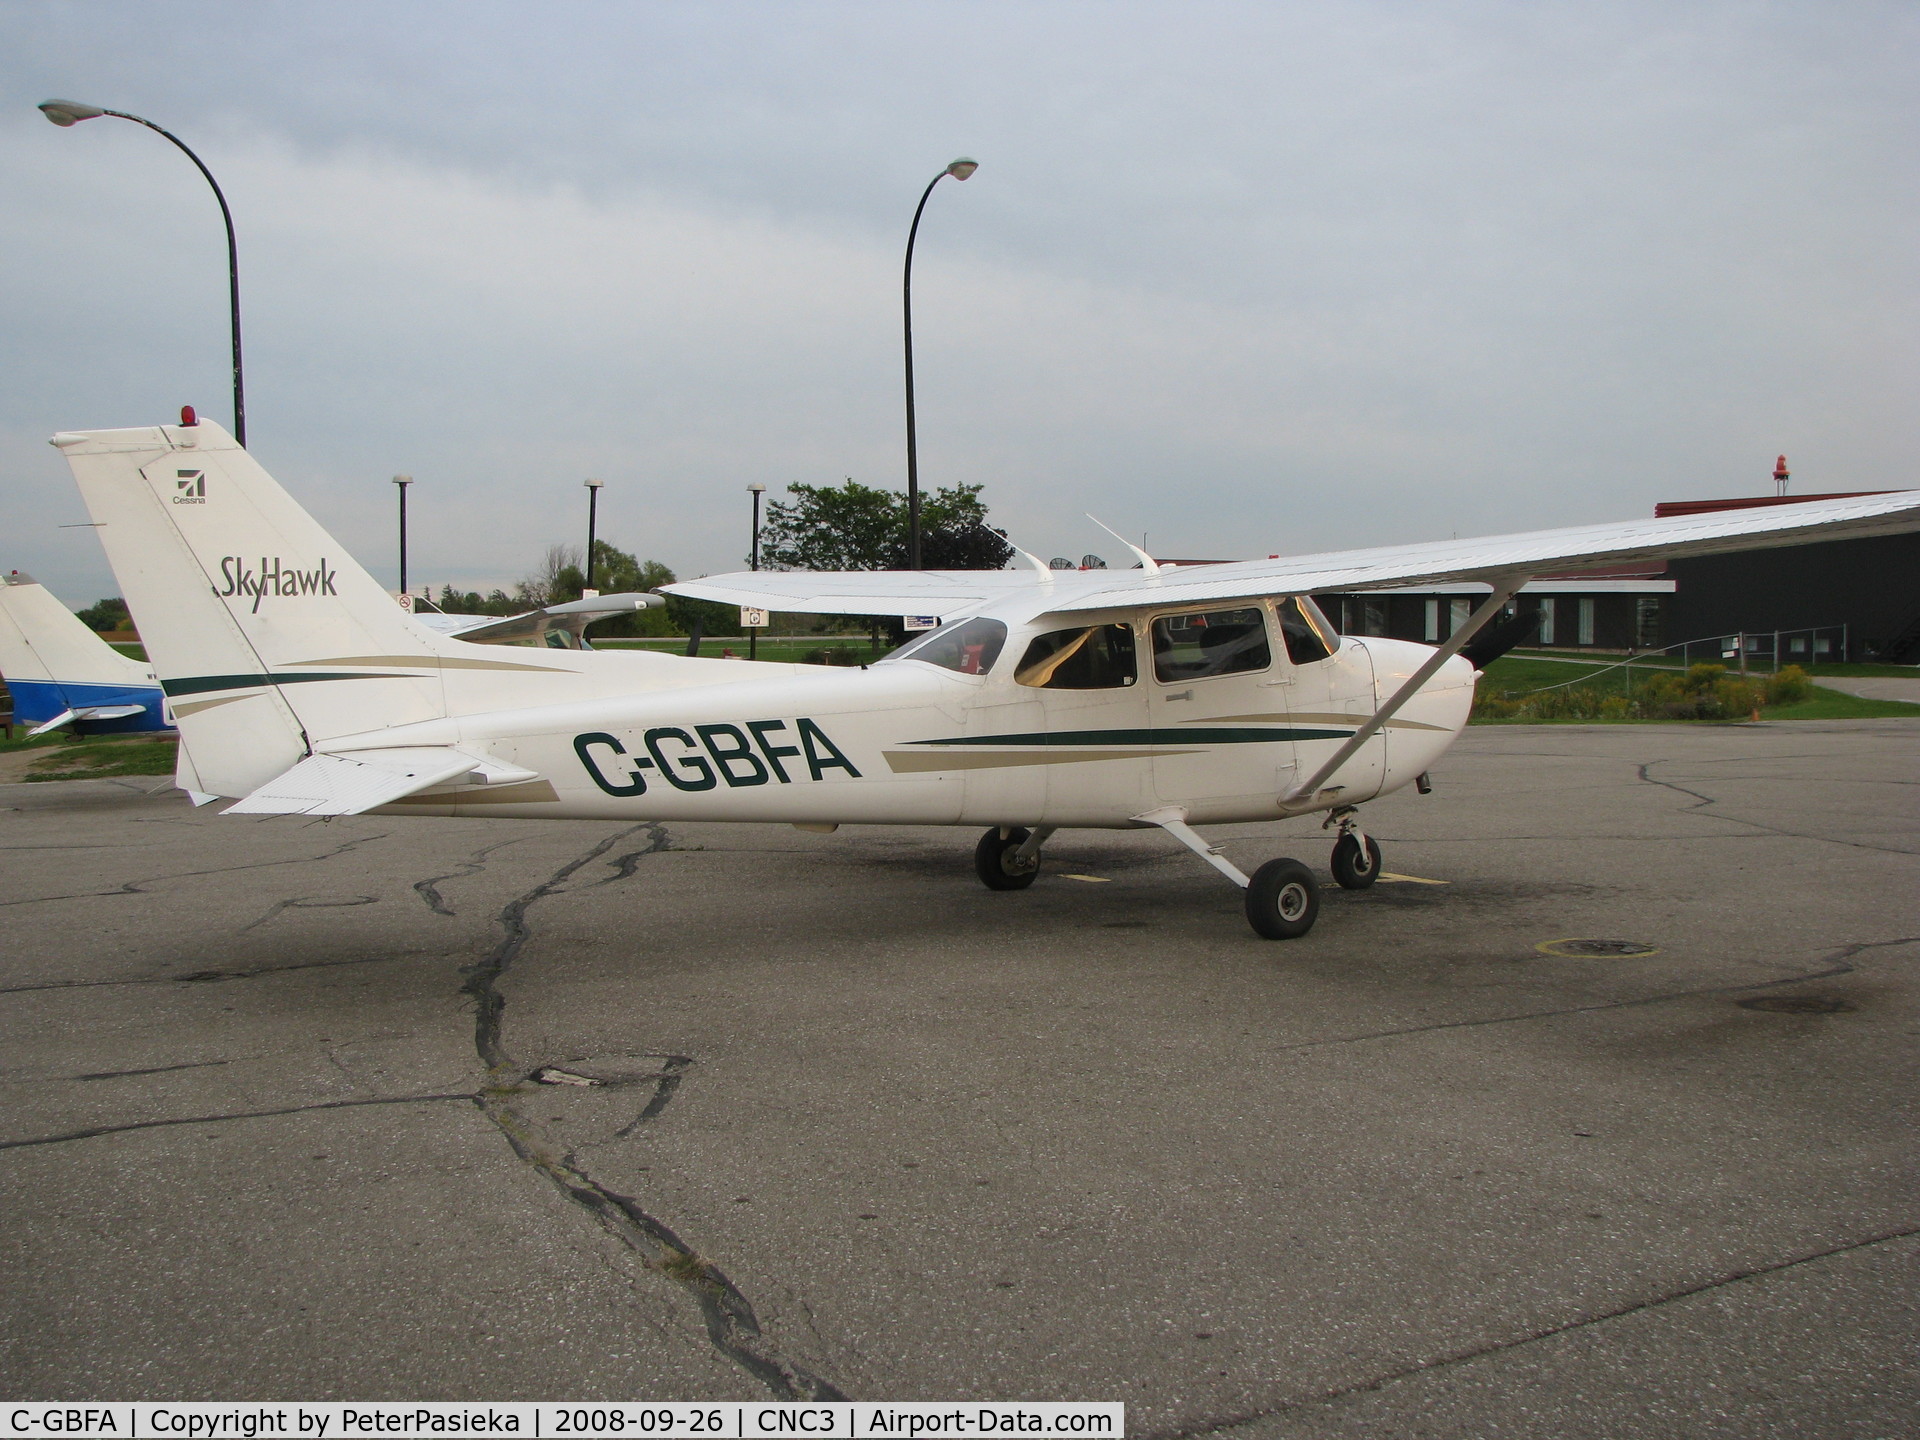 C-GBFA, 2003 Cessna 172R C/N 17281196, @ Brampton Airport, BFC training aircraft